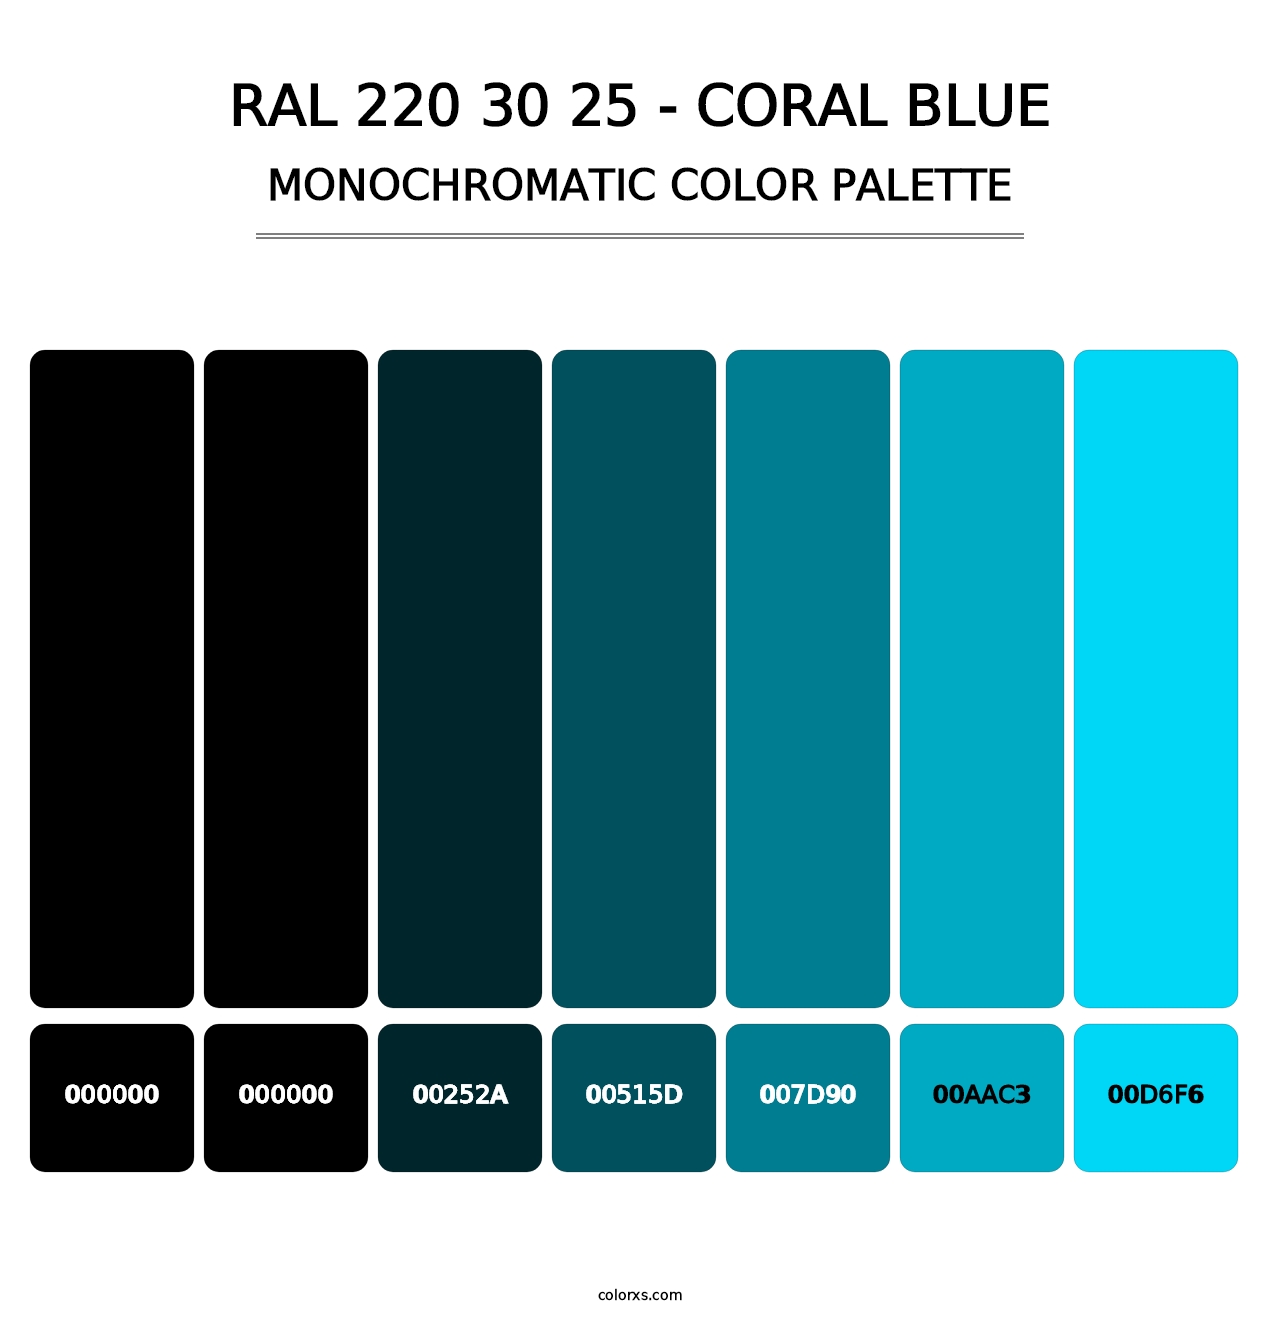 RAL 220 30 25 - Coral Blue - Monochromatic Color Palette